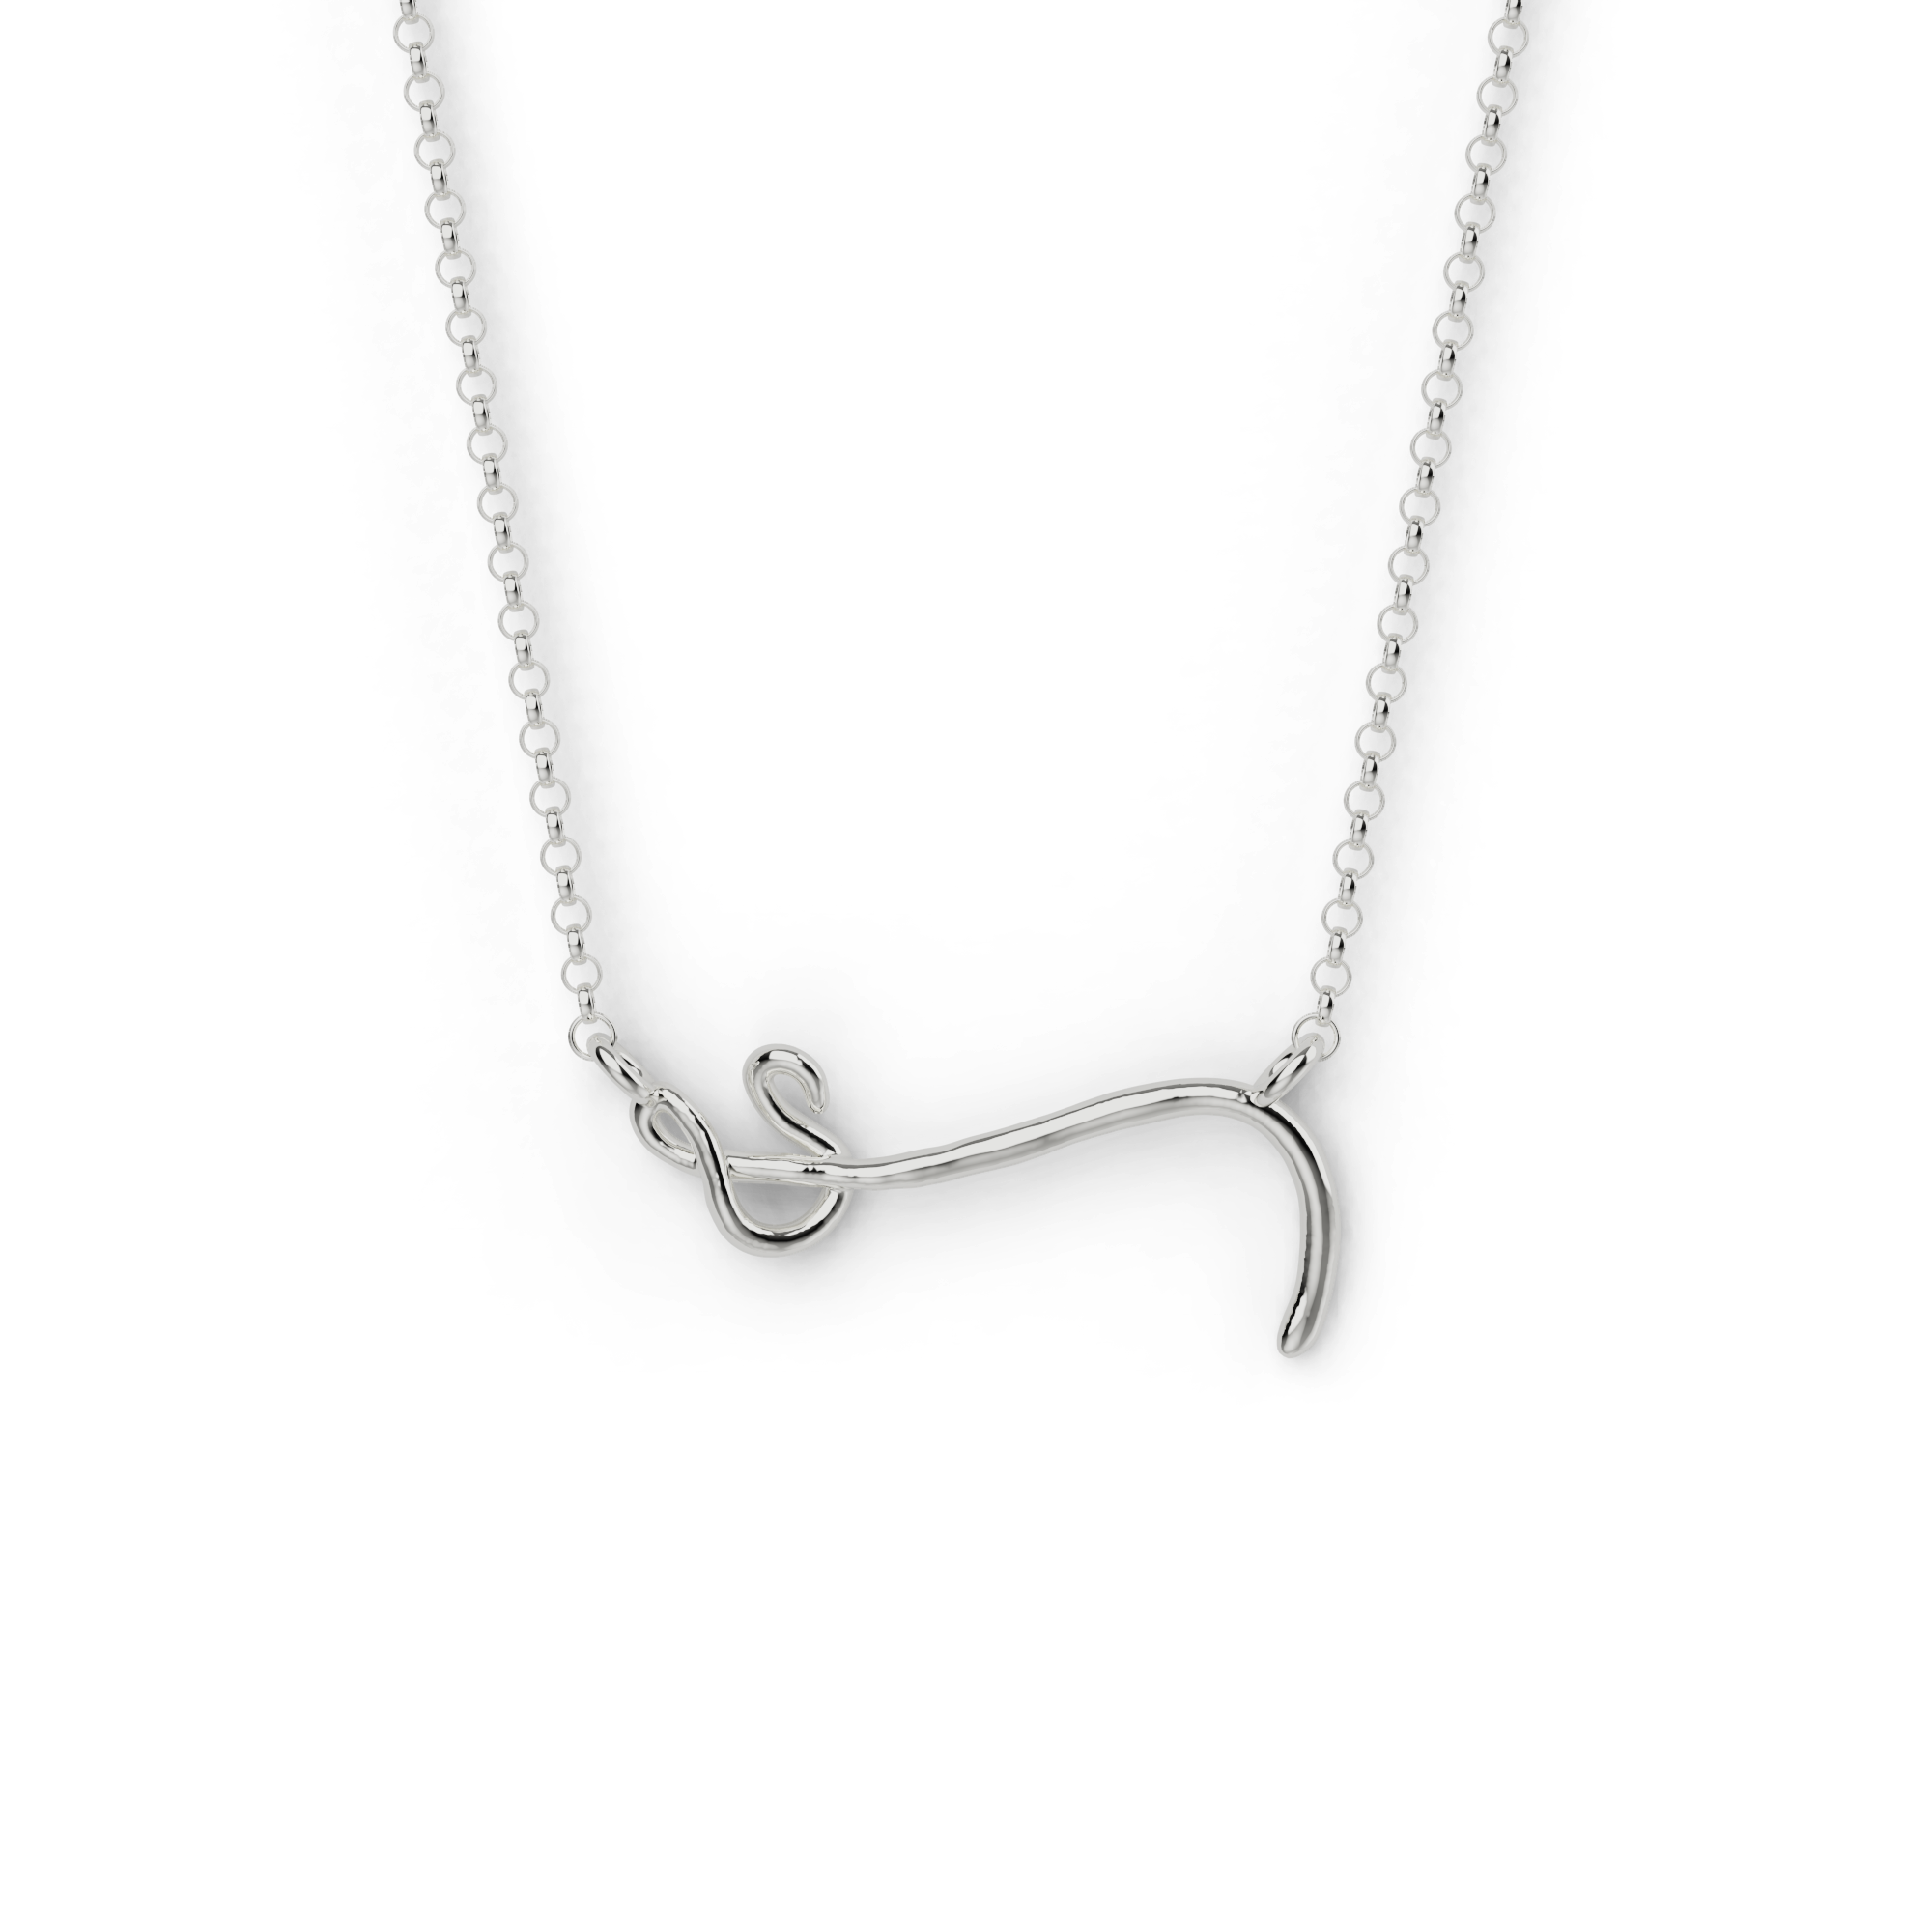 ebola virus necklace | silver